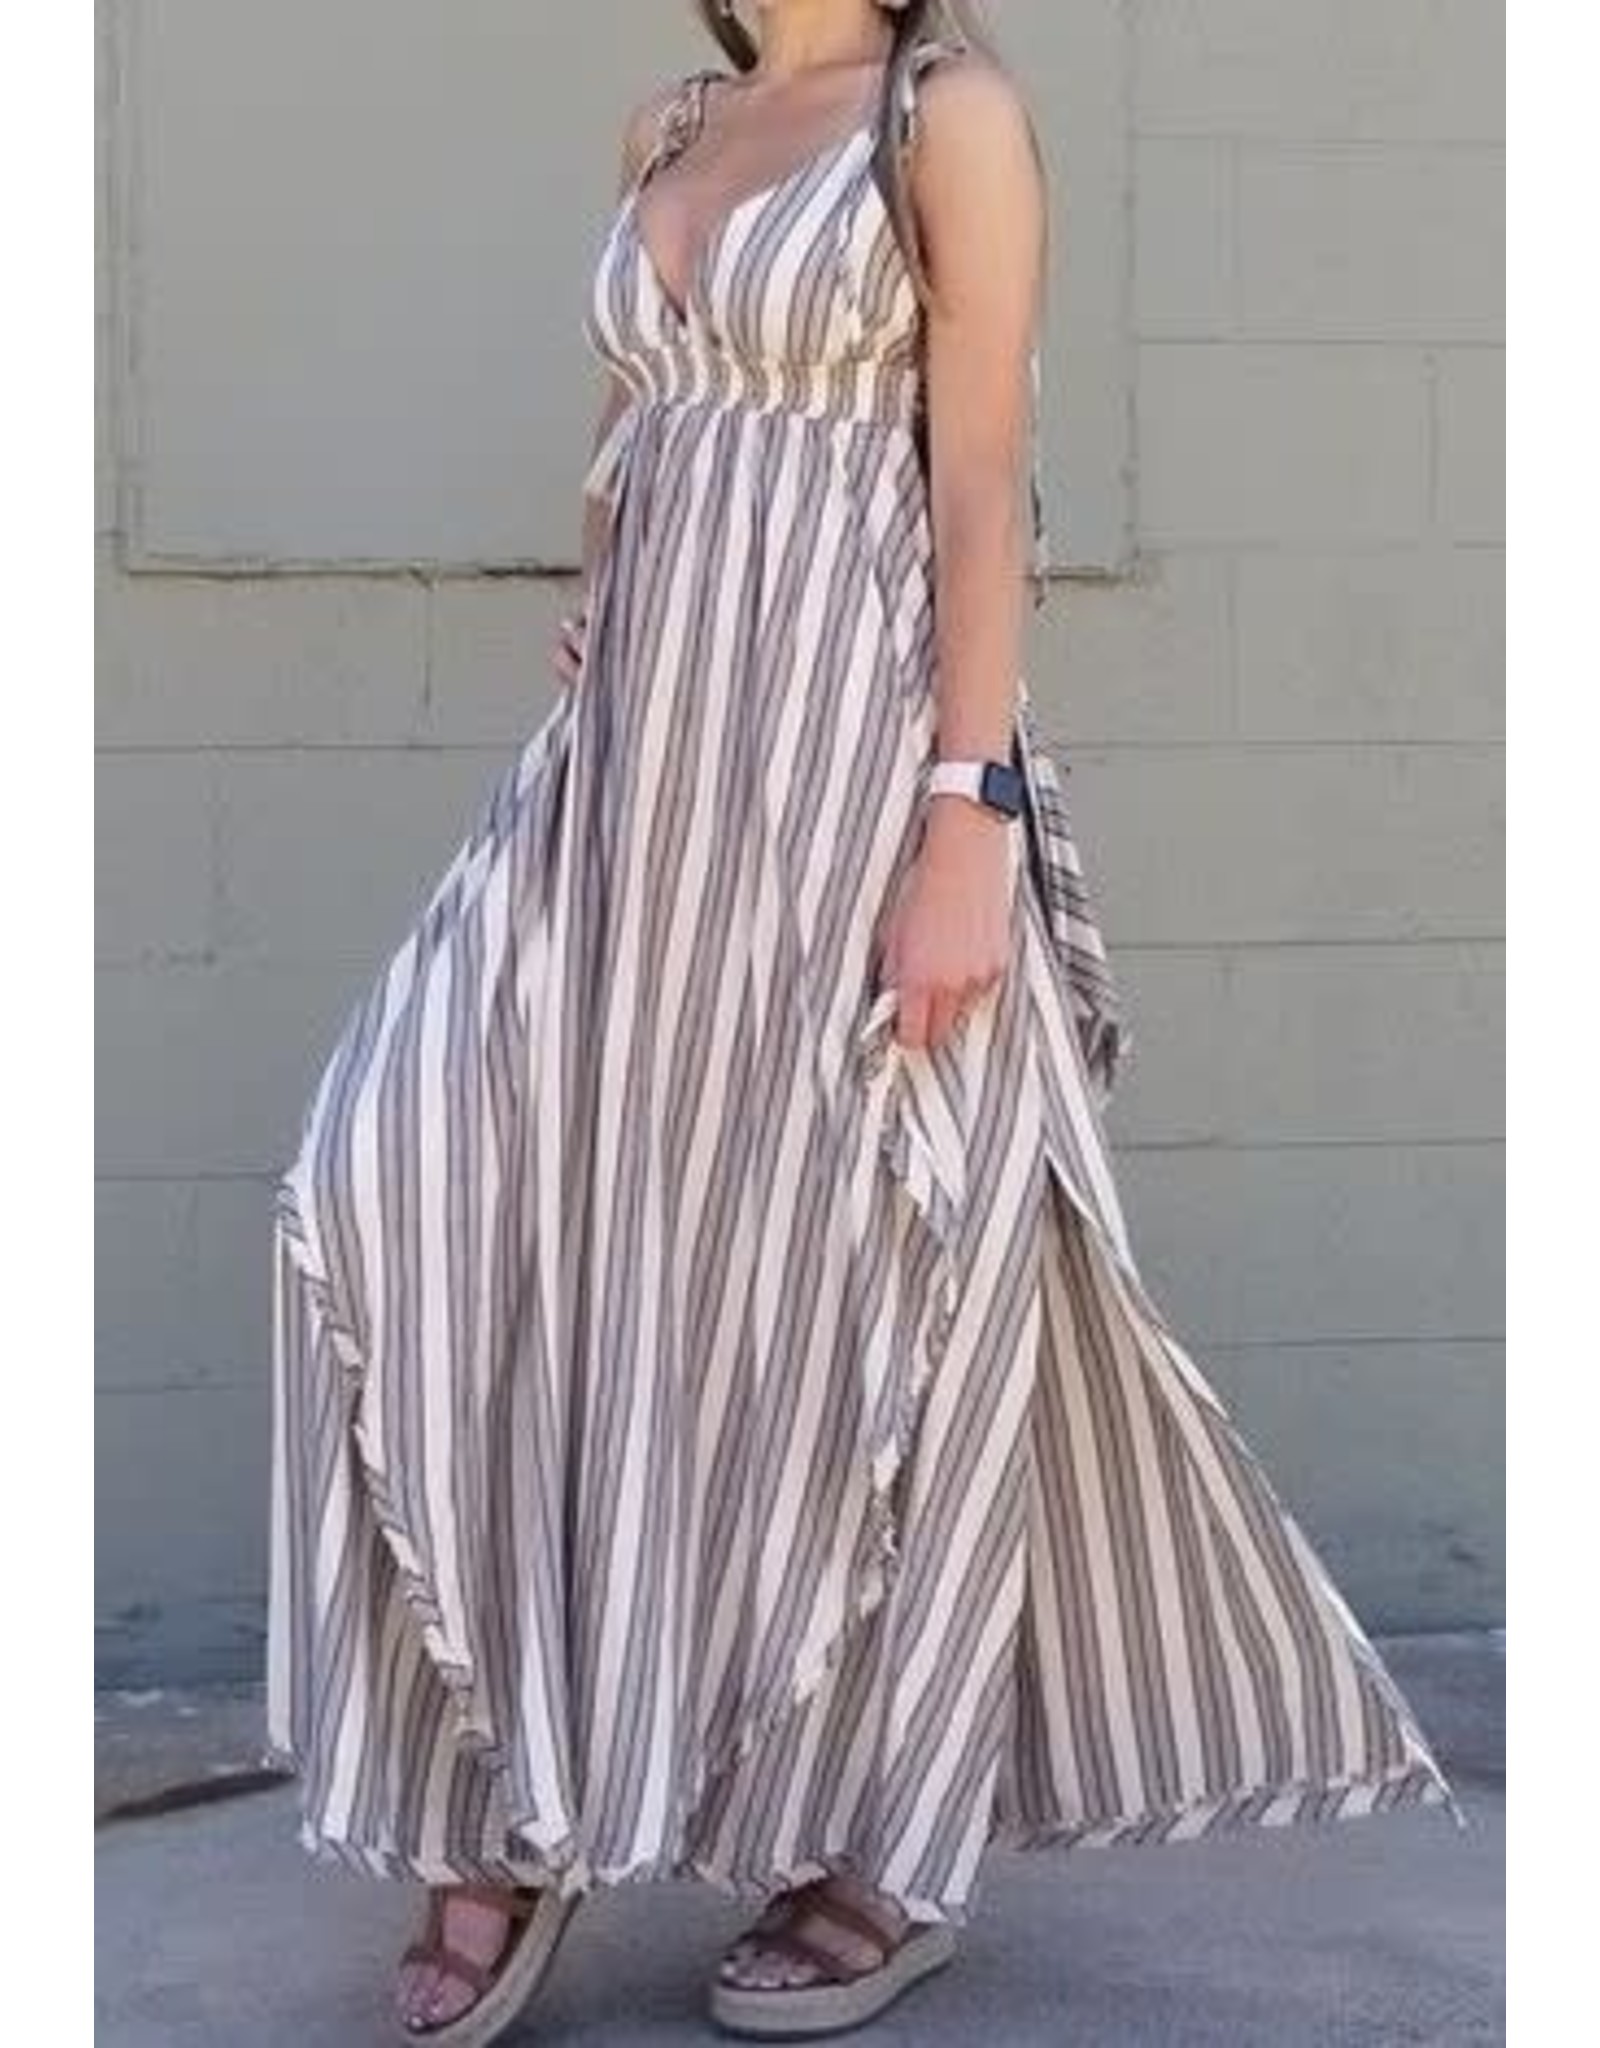 Stripe Sun Dress